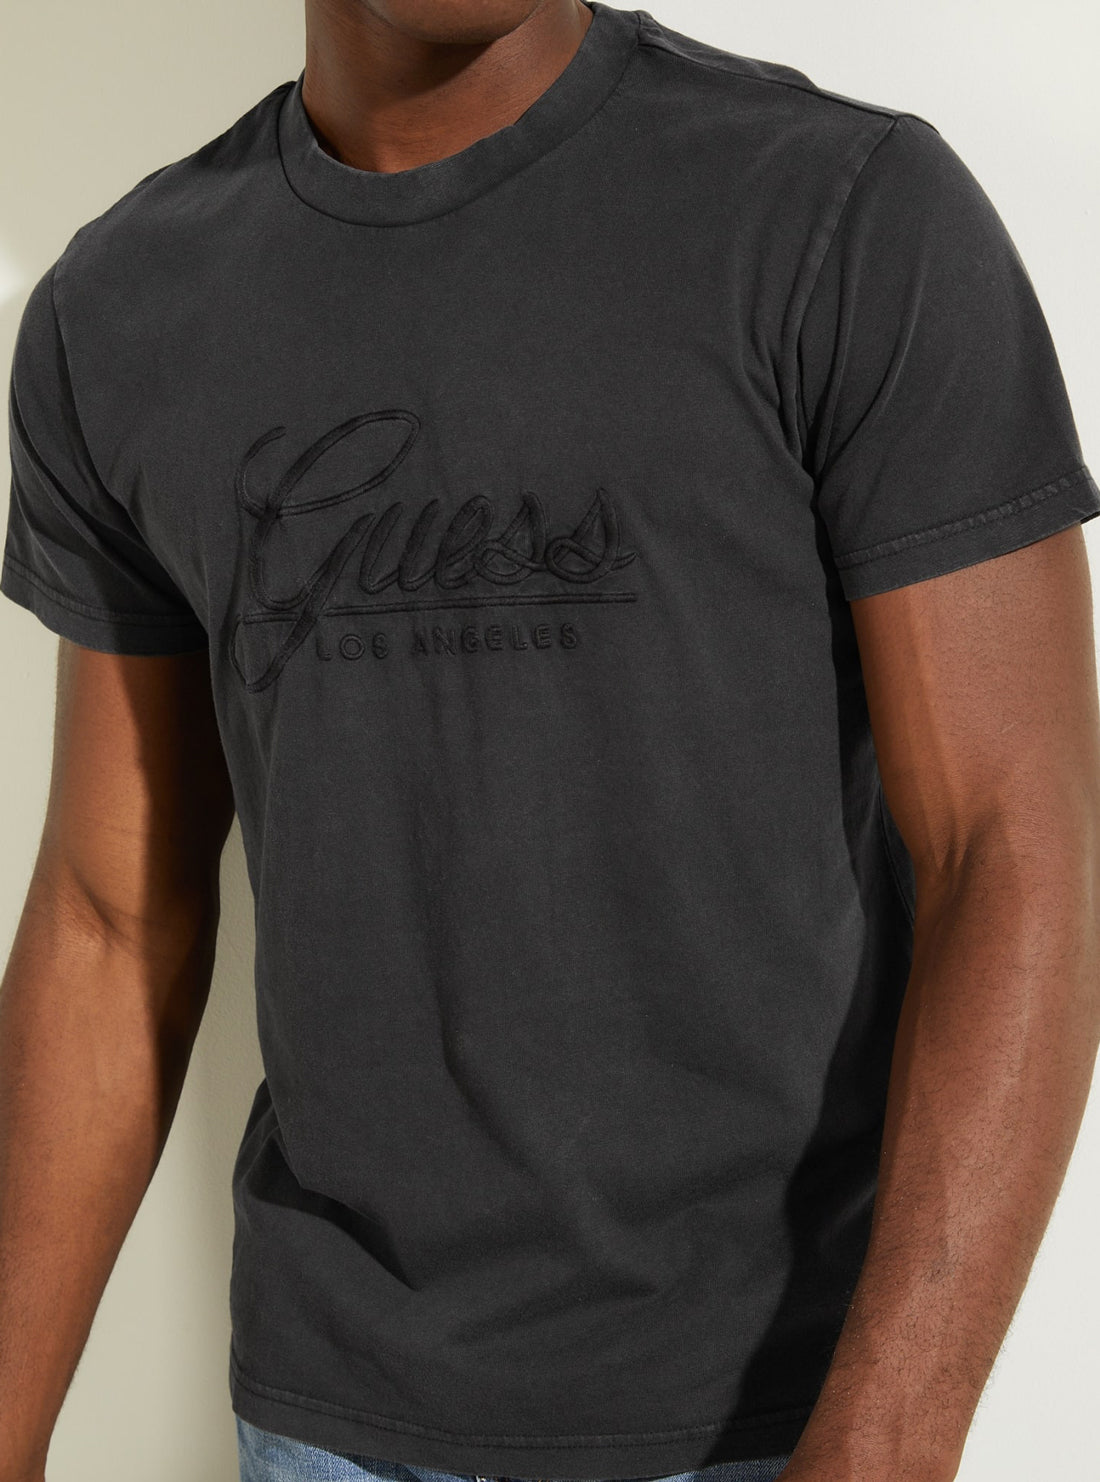 GUESS Mens Black Classical Embroidered Logo T-Shirt M1BI26K8FQ1 Detail View